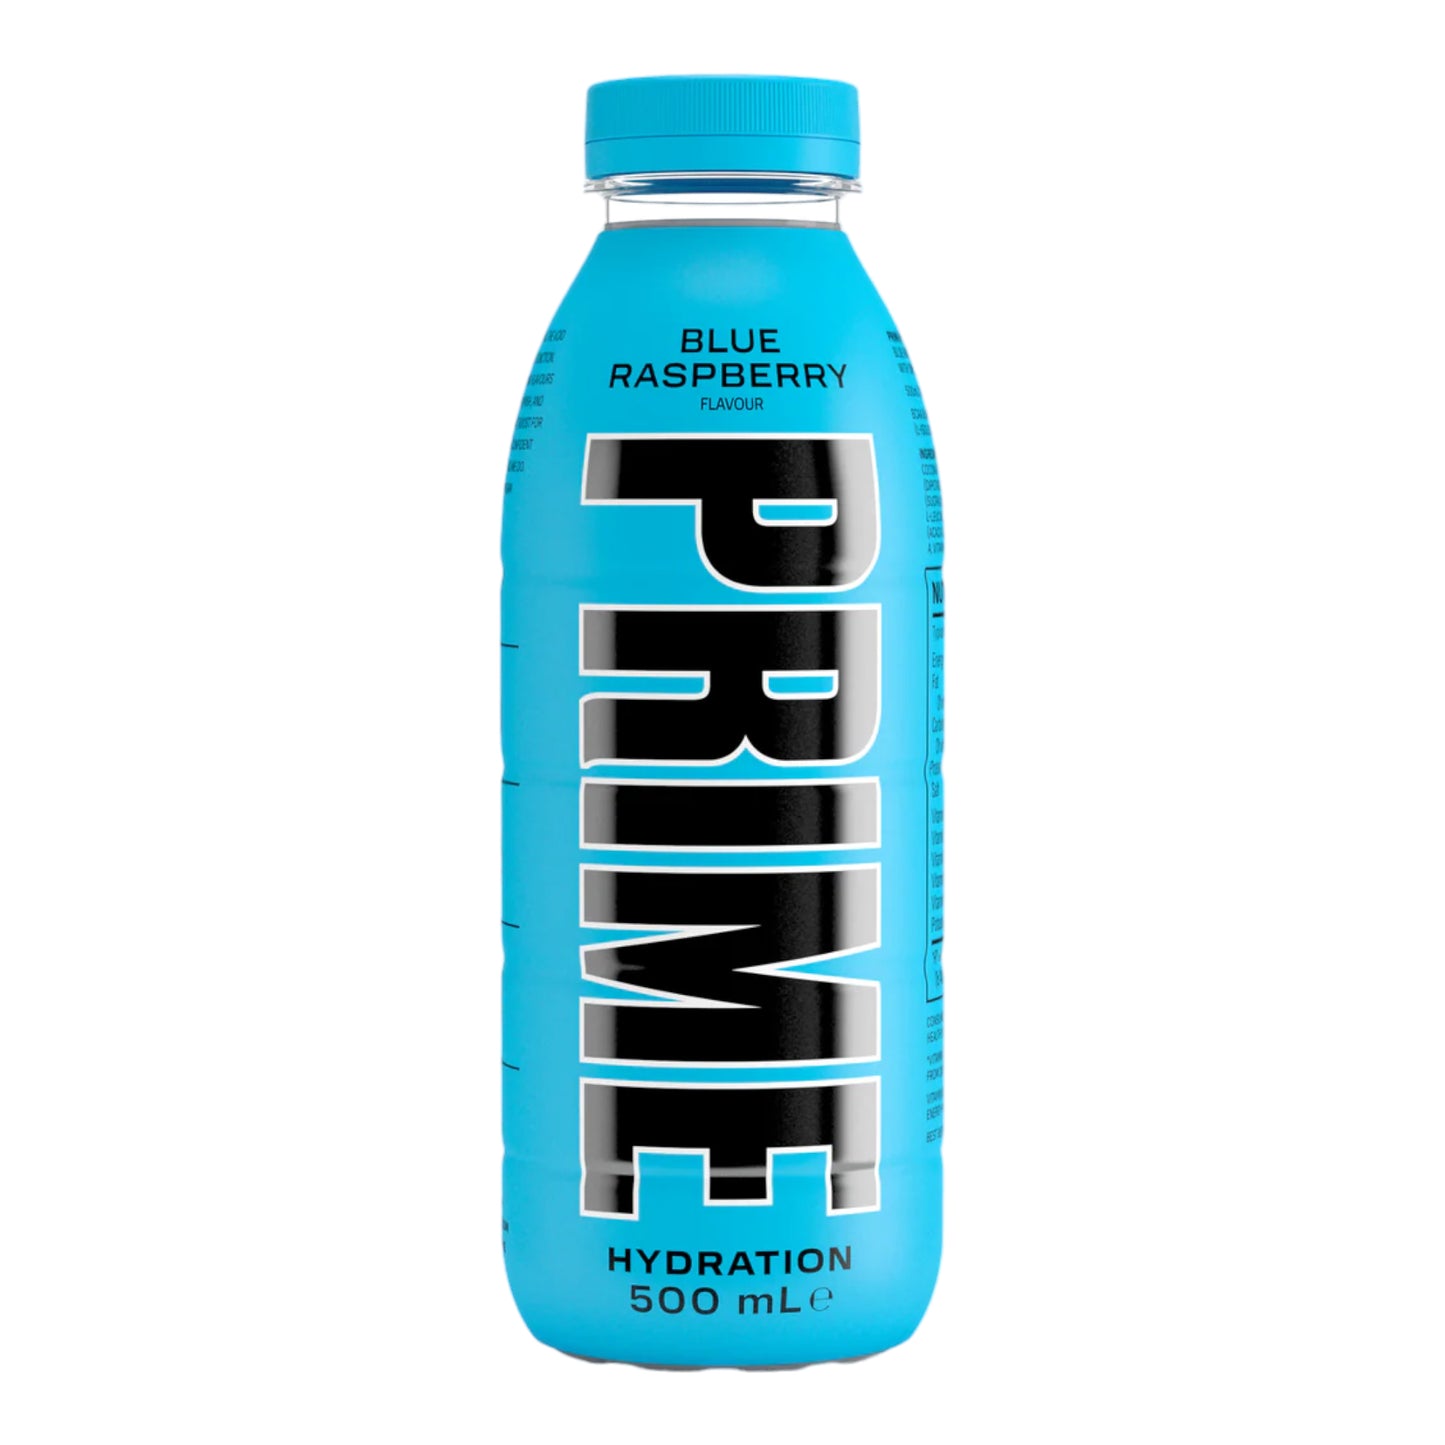 PRIME Hydration Blue Raspberry - 500ml (UK VERSION)